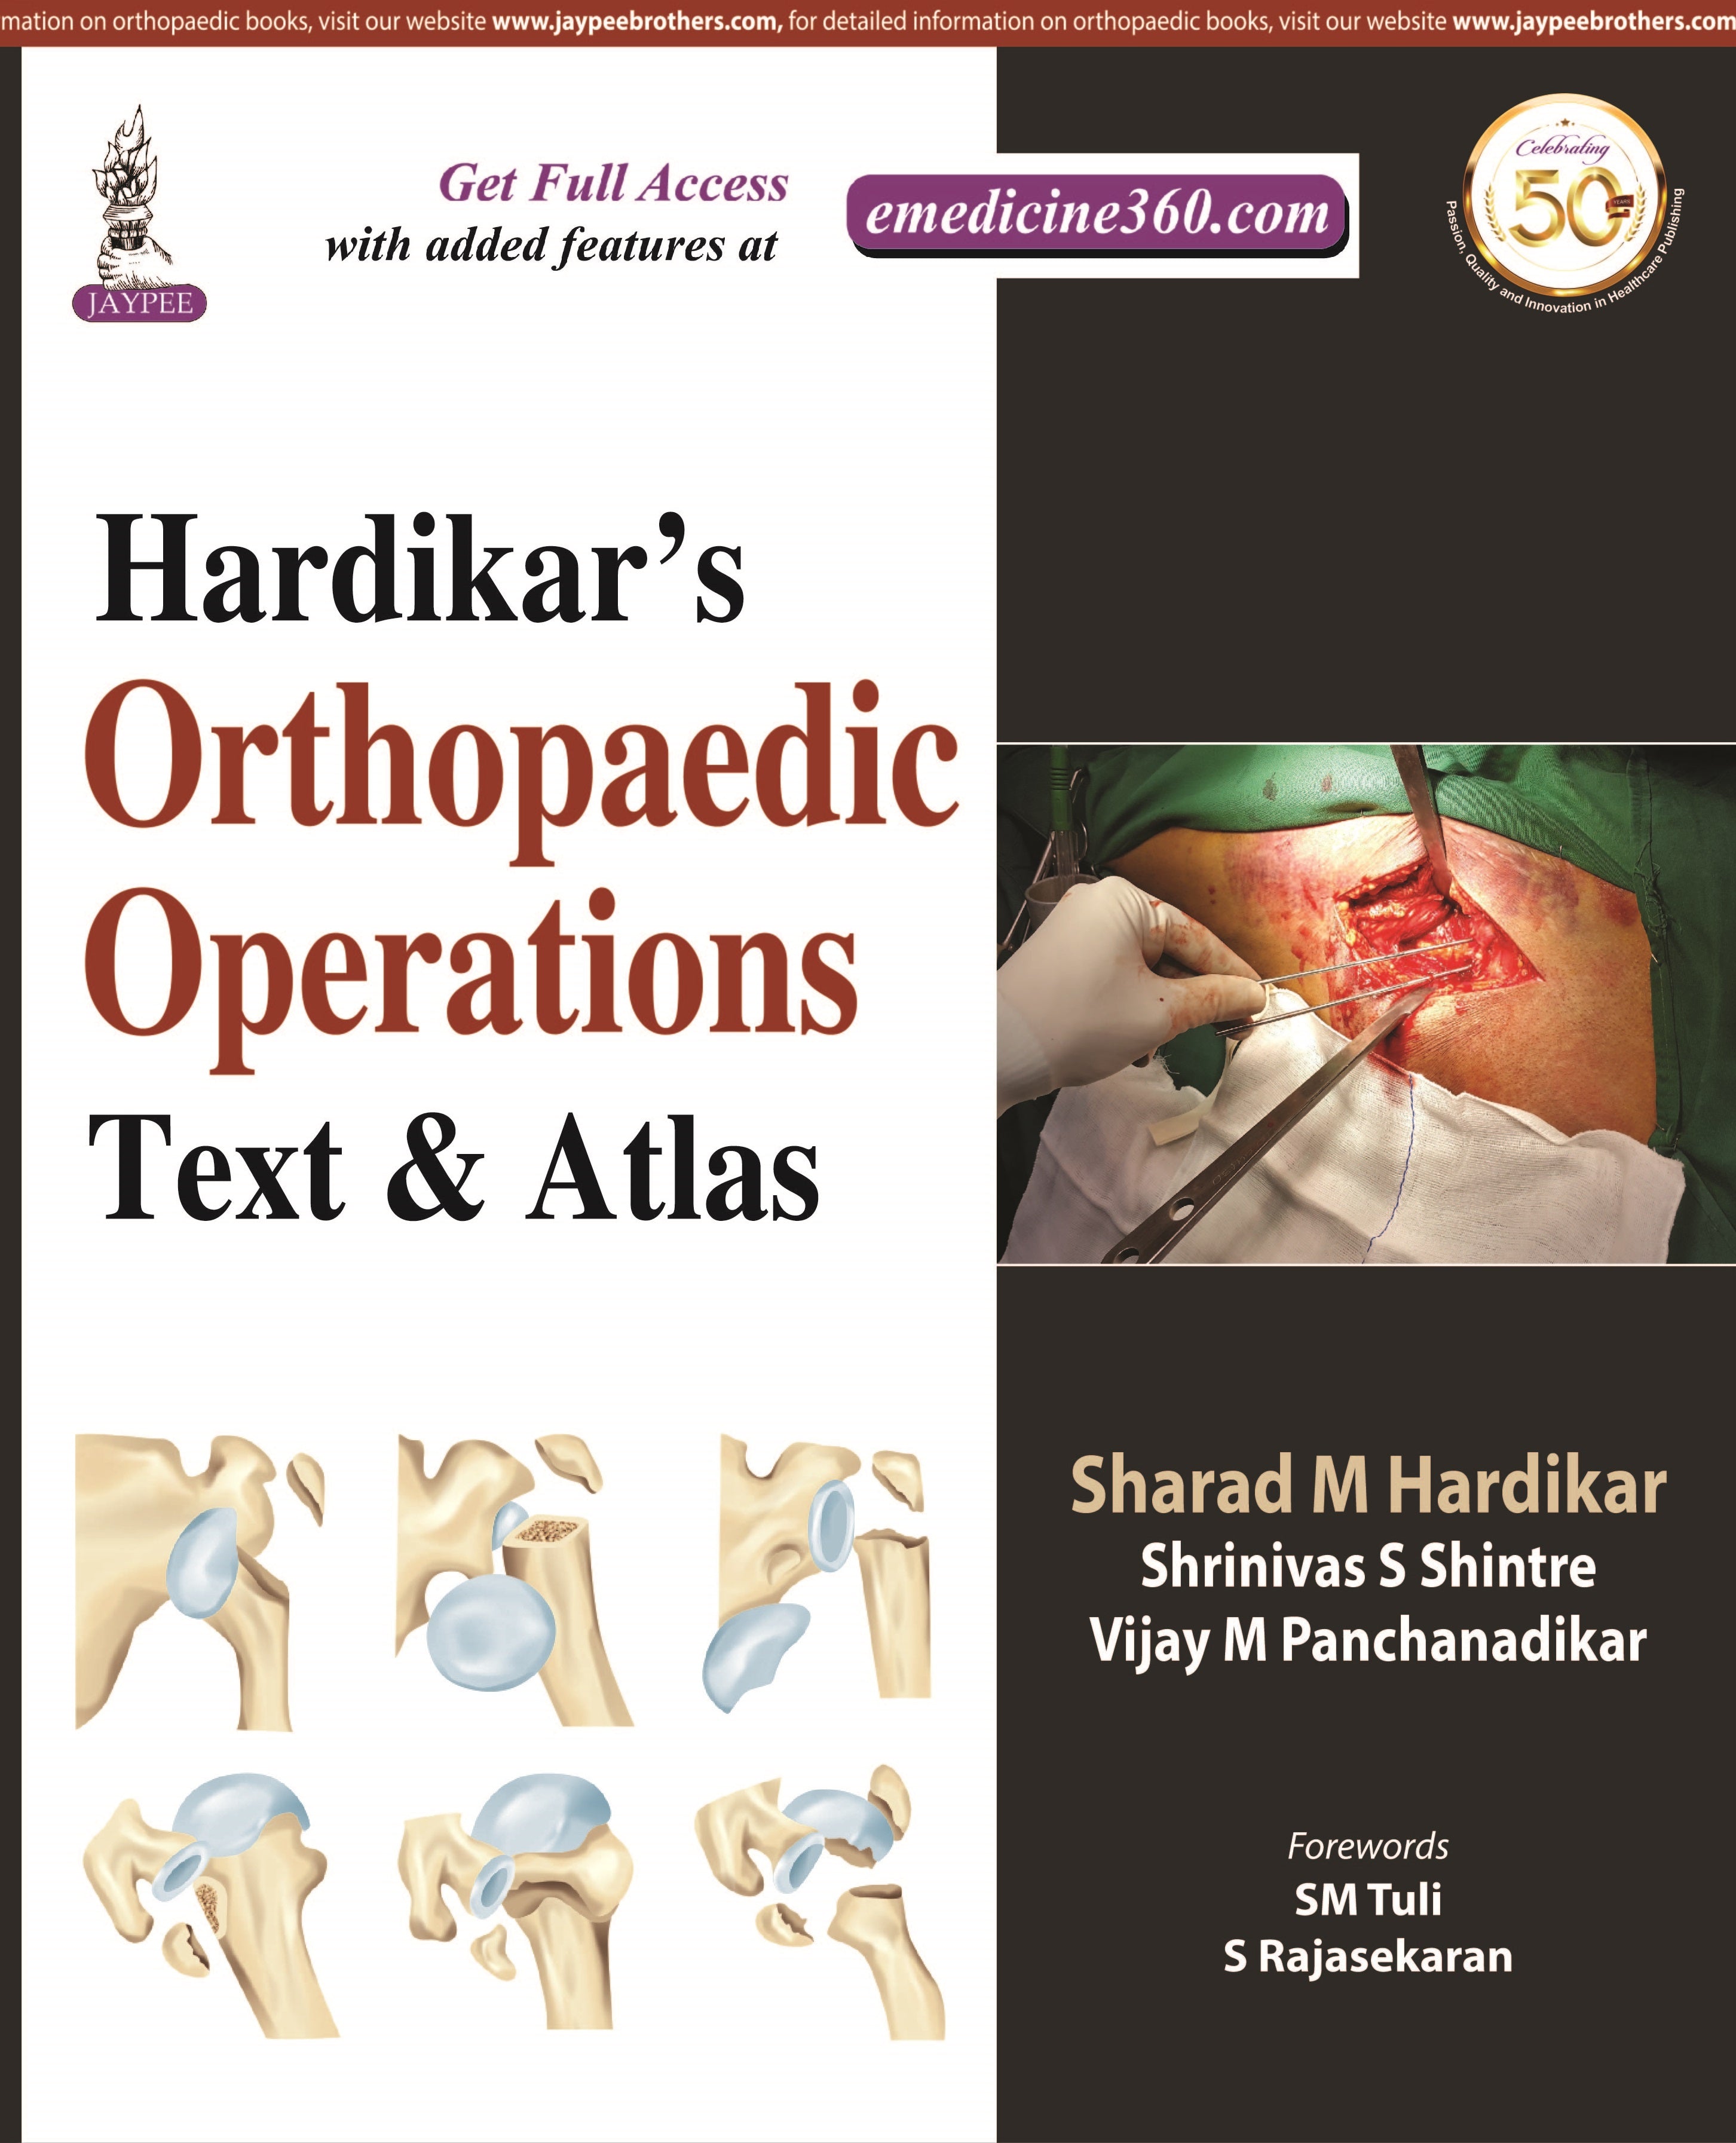 HARDIKAR’S ORTHOPAEDIC OPERATIONS: TEXT & ATLAS
,1/E,SHARAD M HARDIKAR